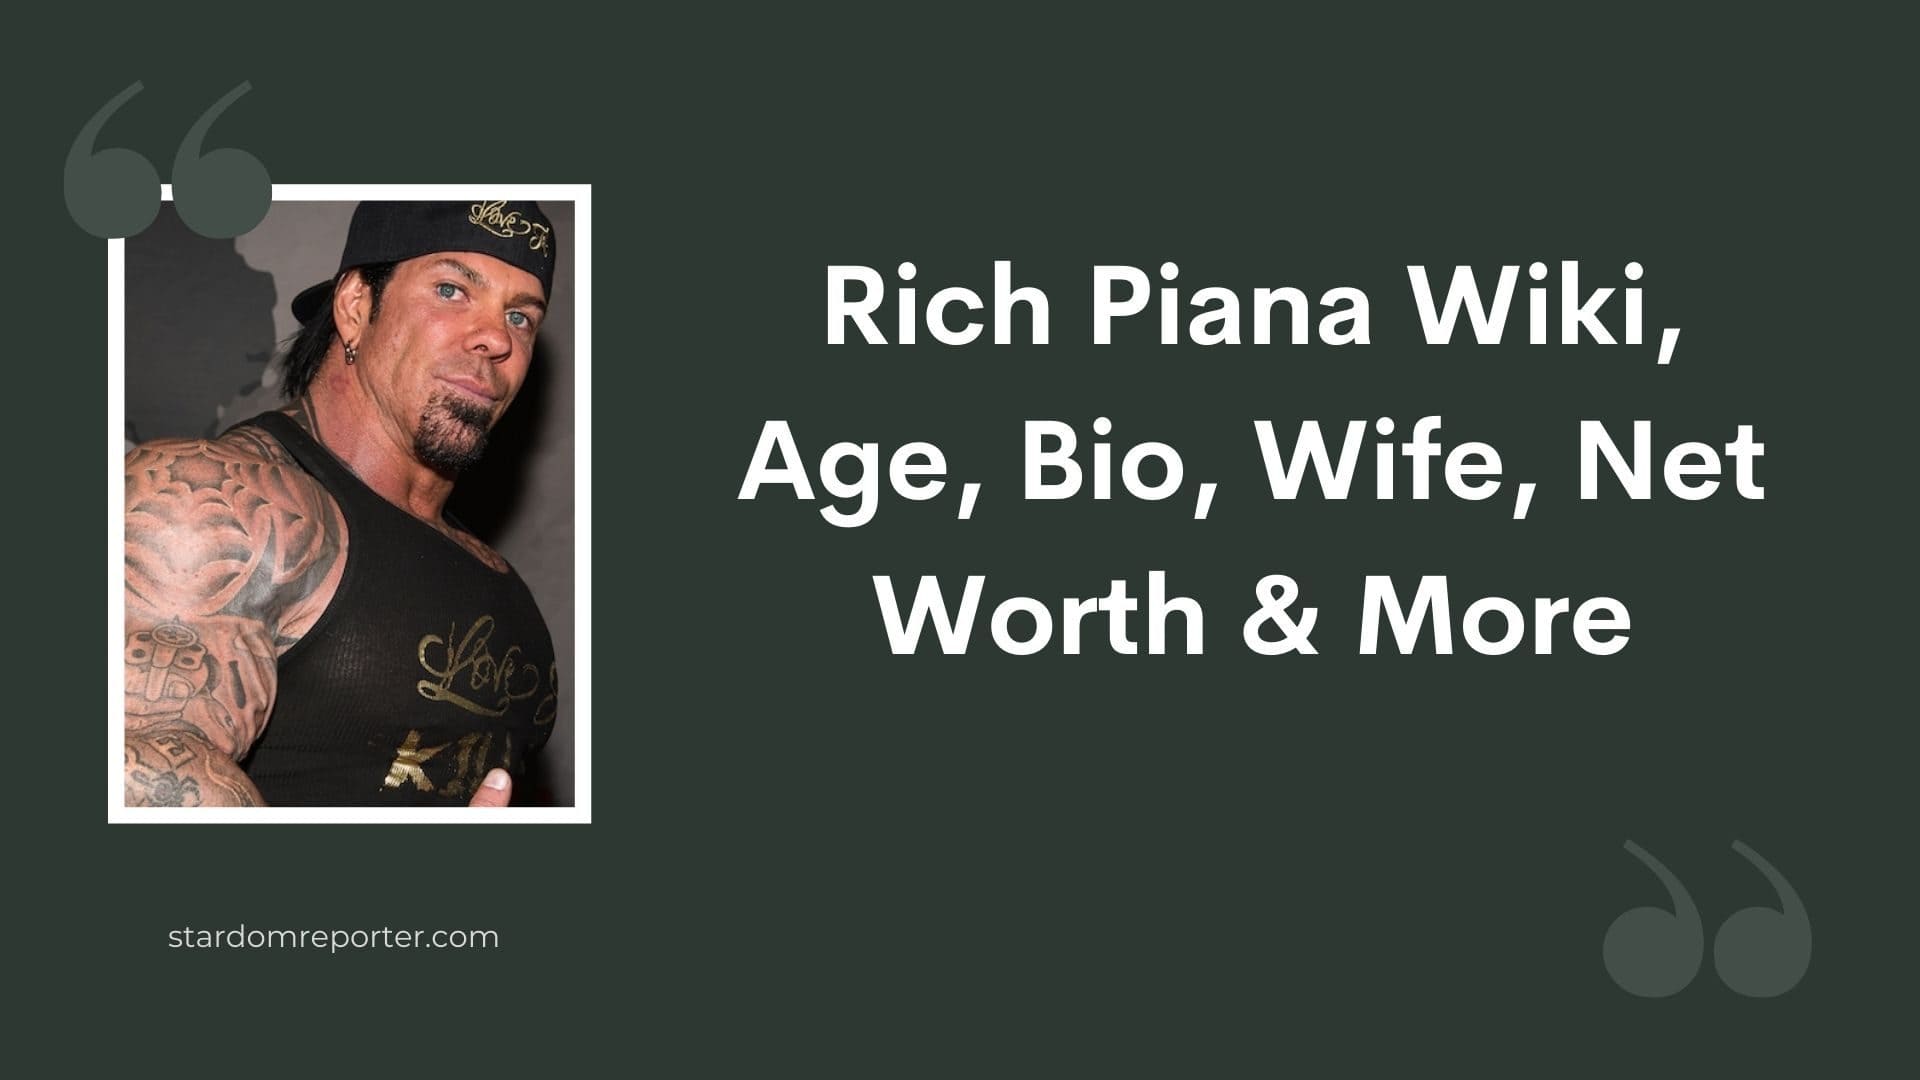 Rich Piana Wiki, Age, Bio, Wife, Net Worth & More - 21